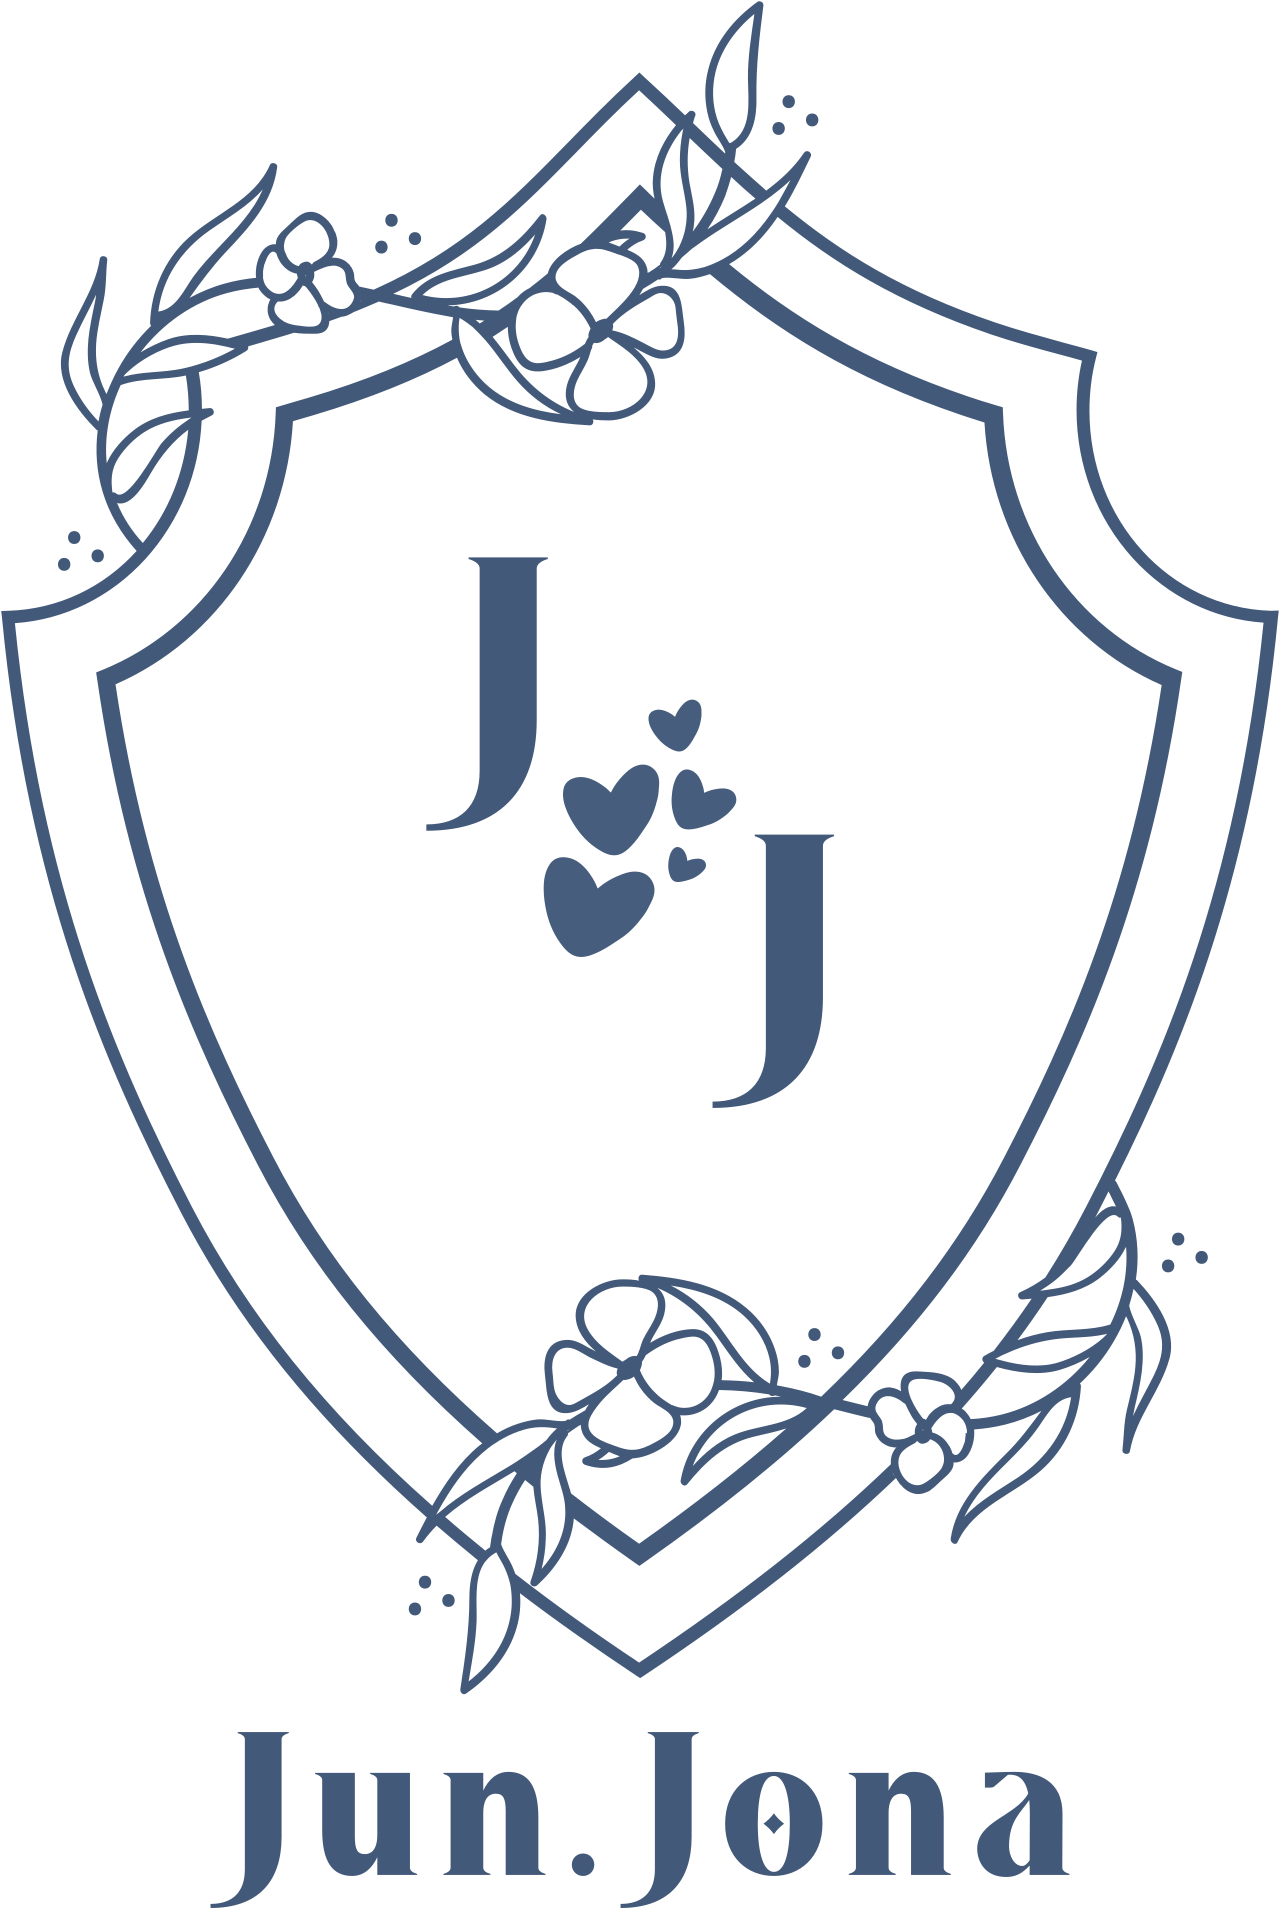 Jun.Jona's logo